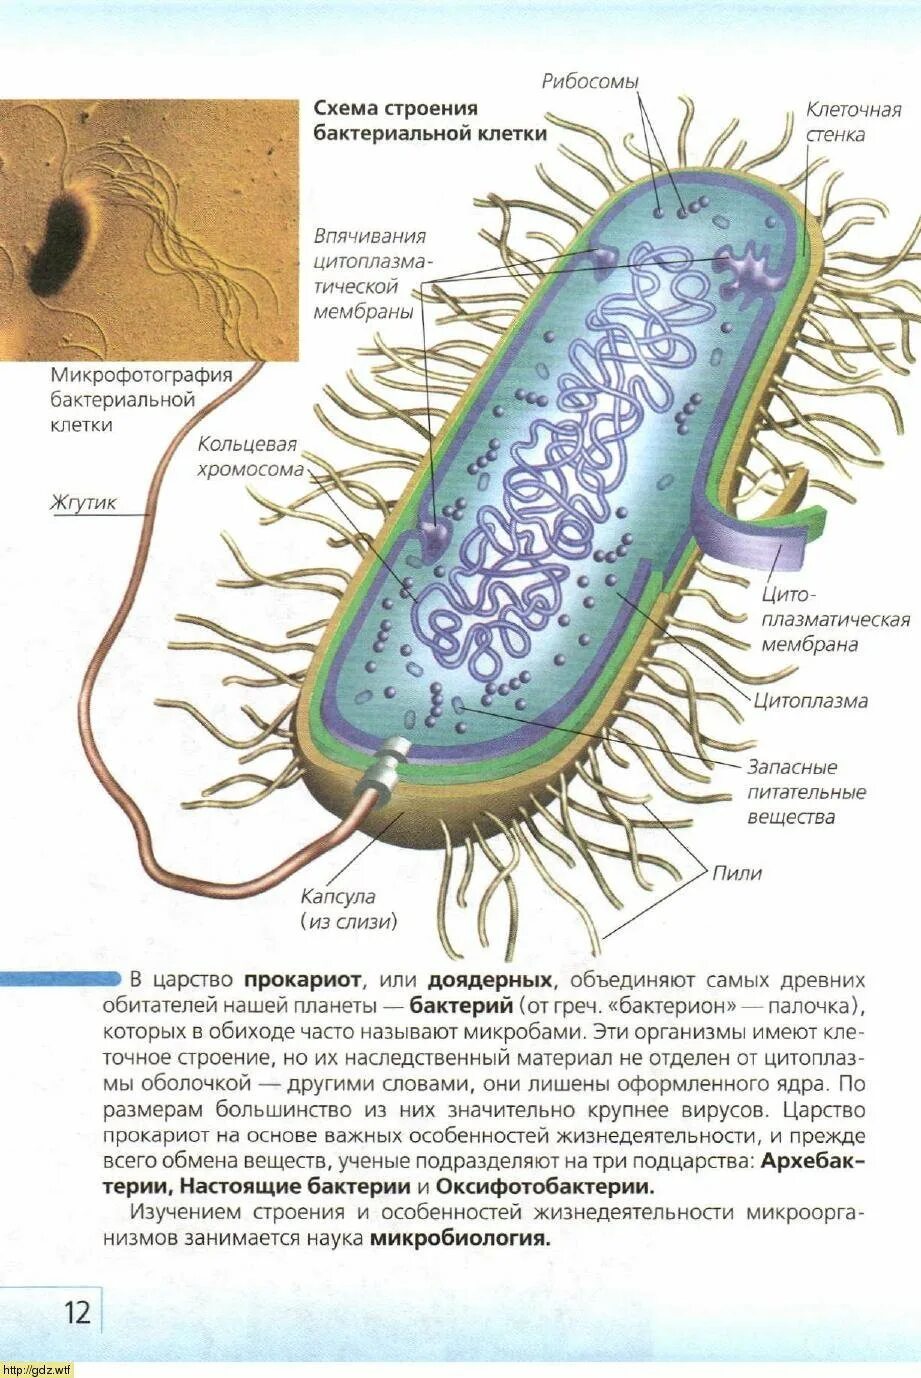 Бактерия прокариот строение. Строение бактериальной клетки прокариот. Строение бактериальной клетки. Особенности строения бактериальной клетки. Строение прокариот.